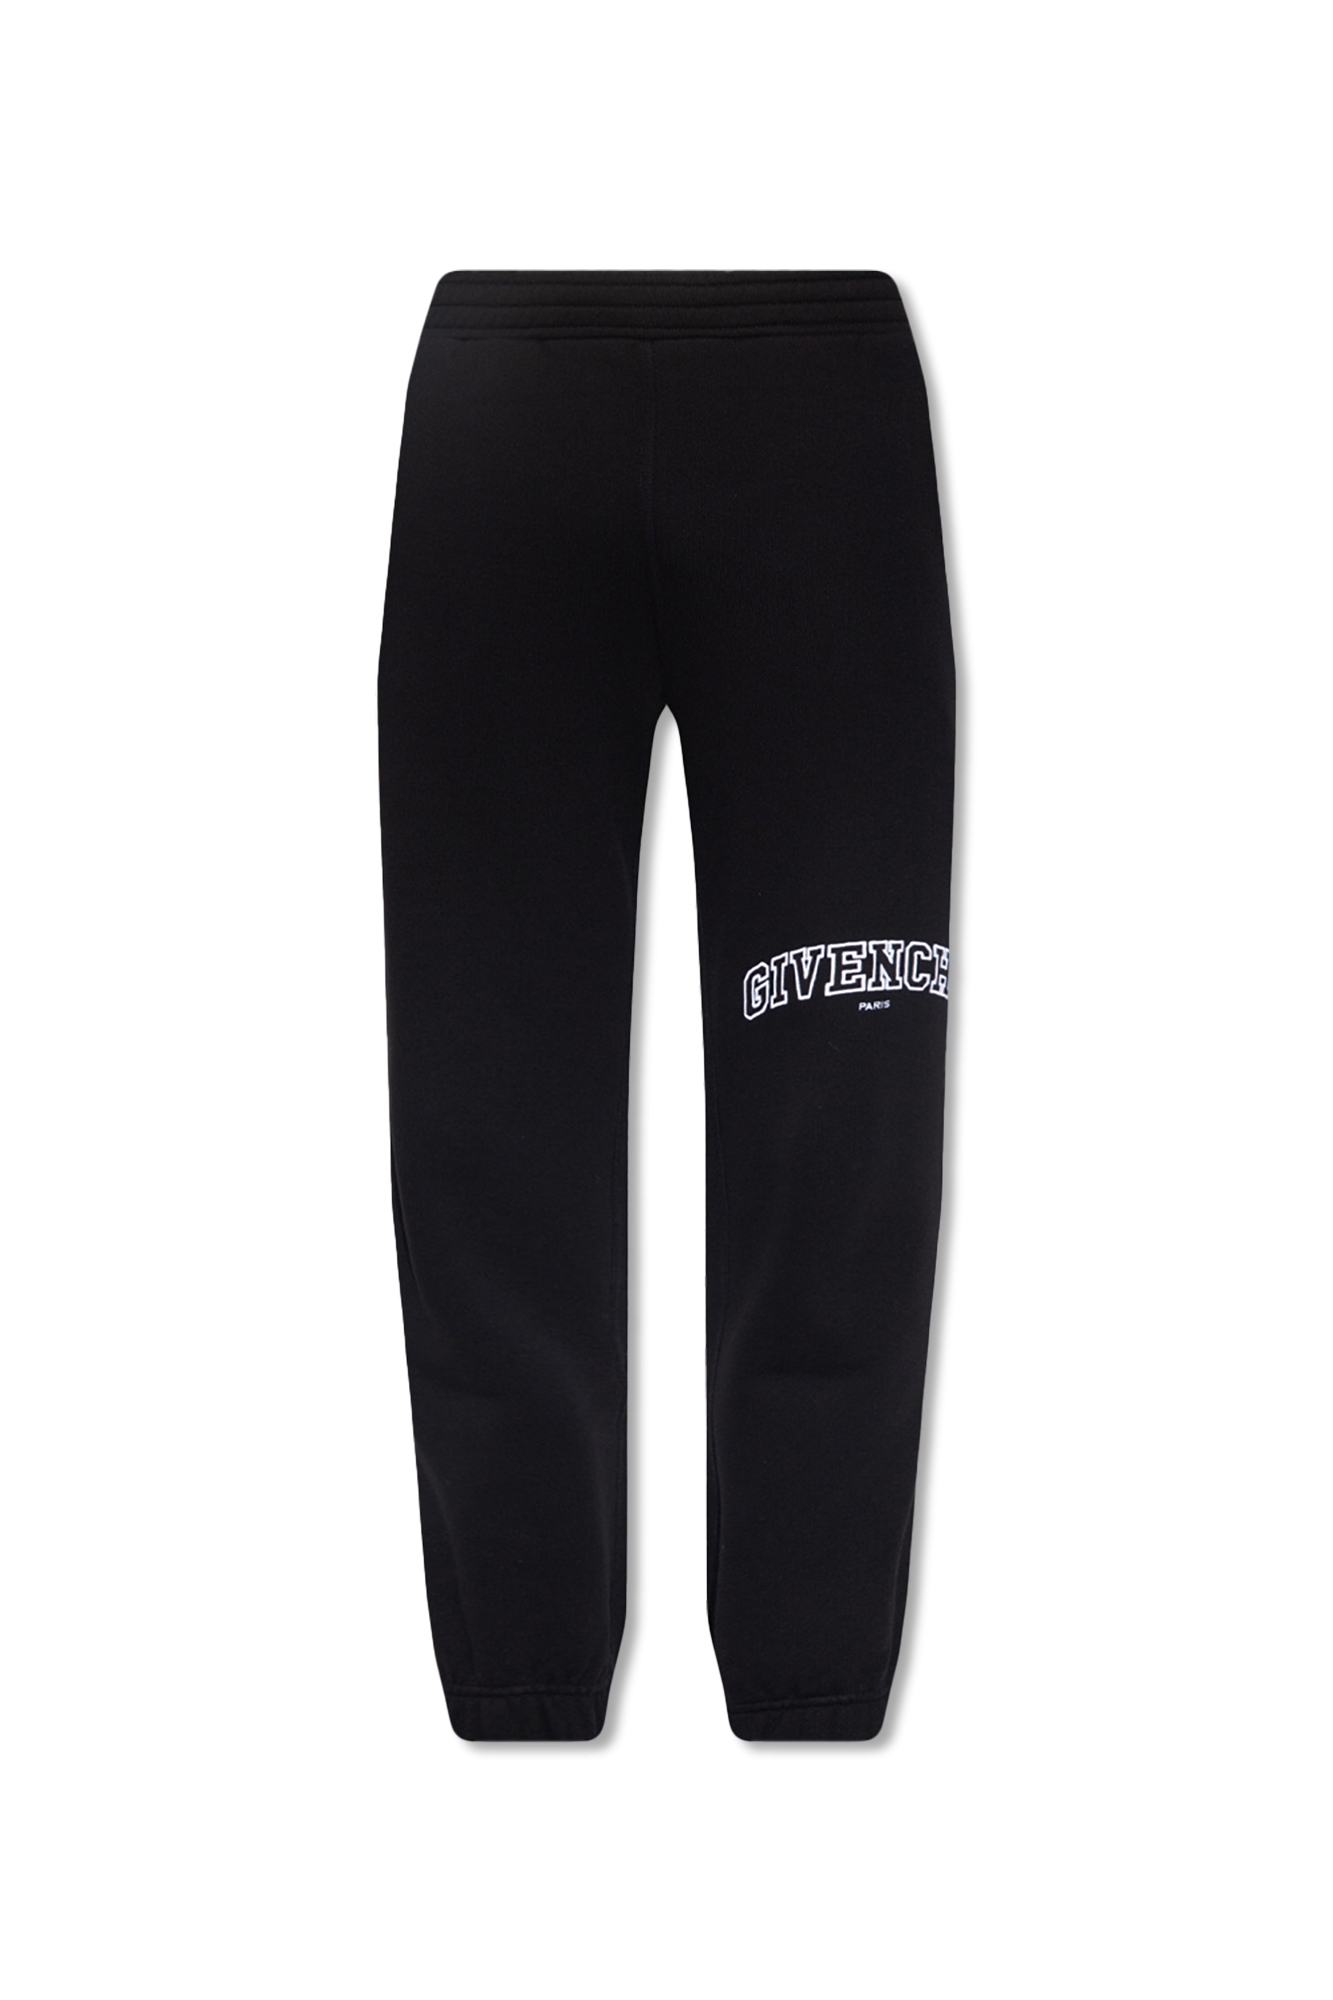 Black Sweatpants with logo Givenchy - Vitkac Germany